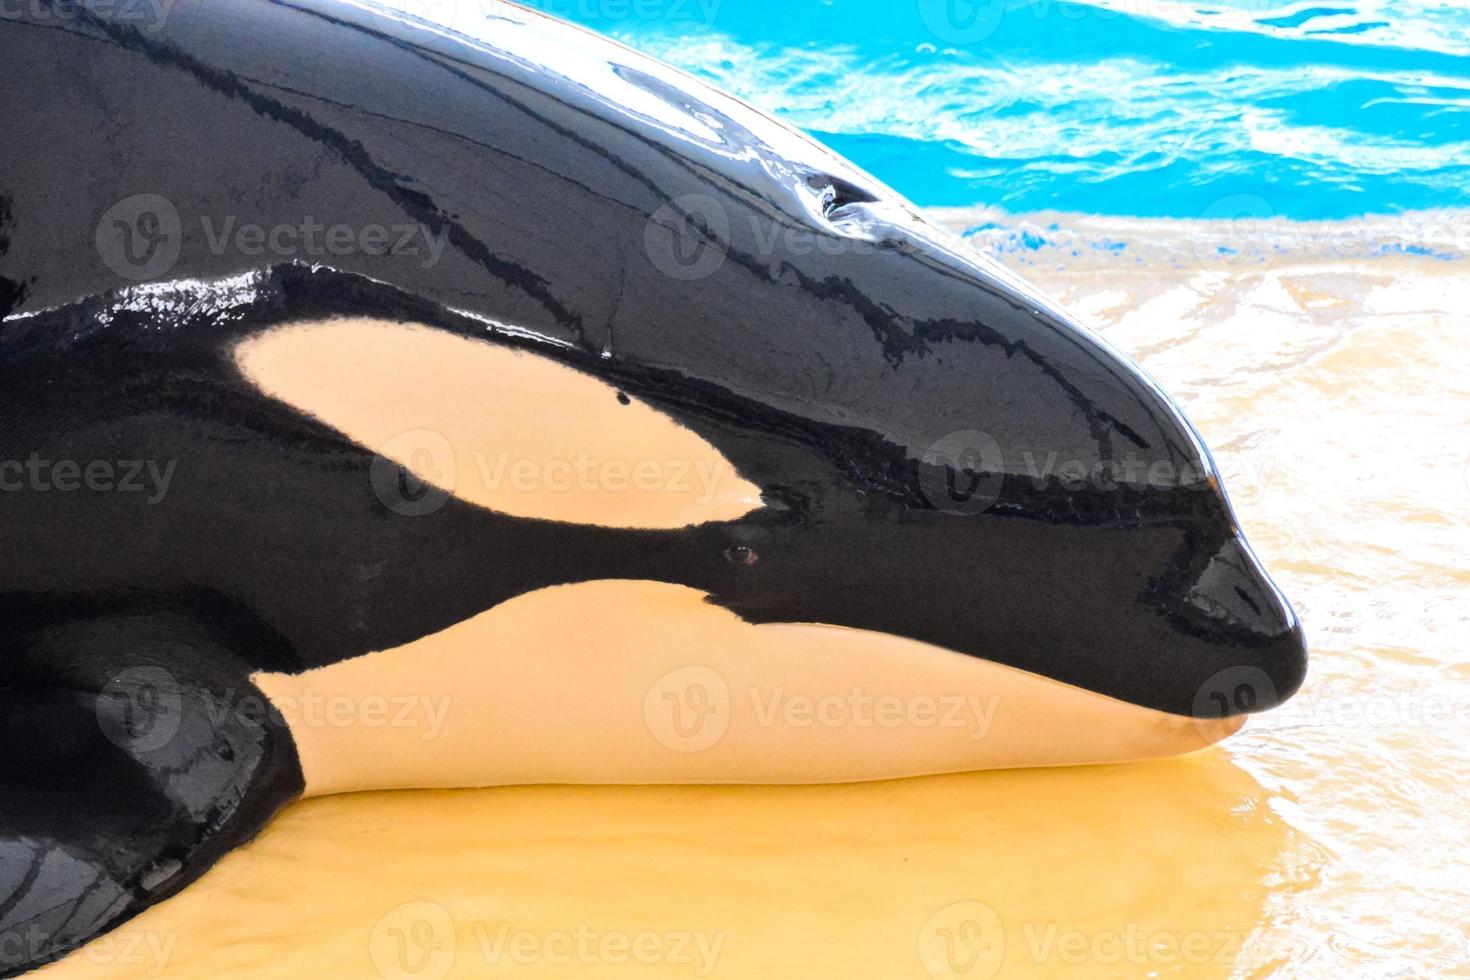 orka walvis in de aquarium foto